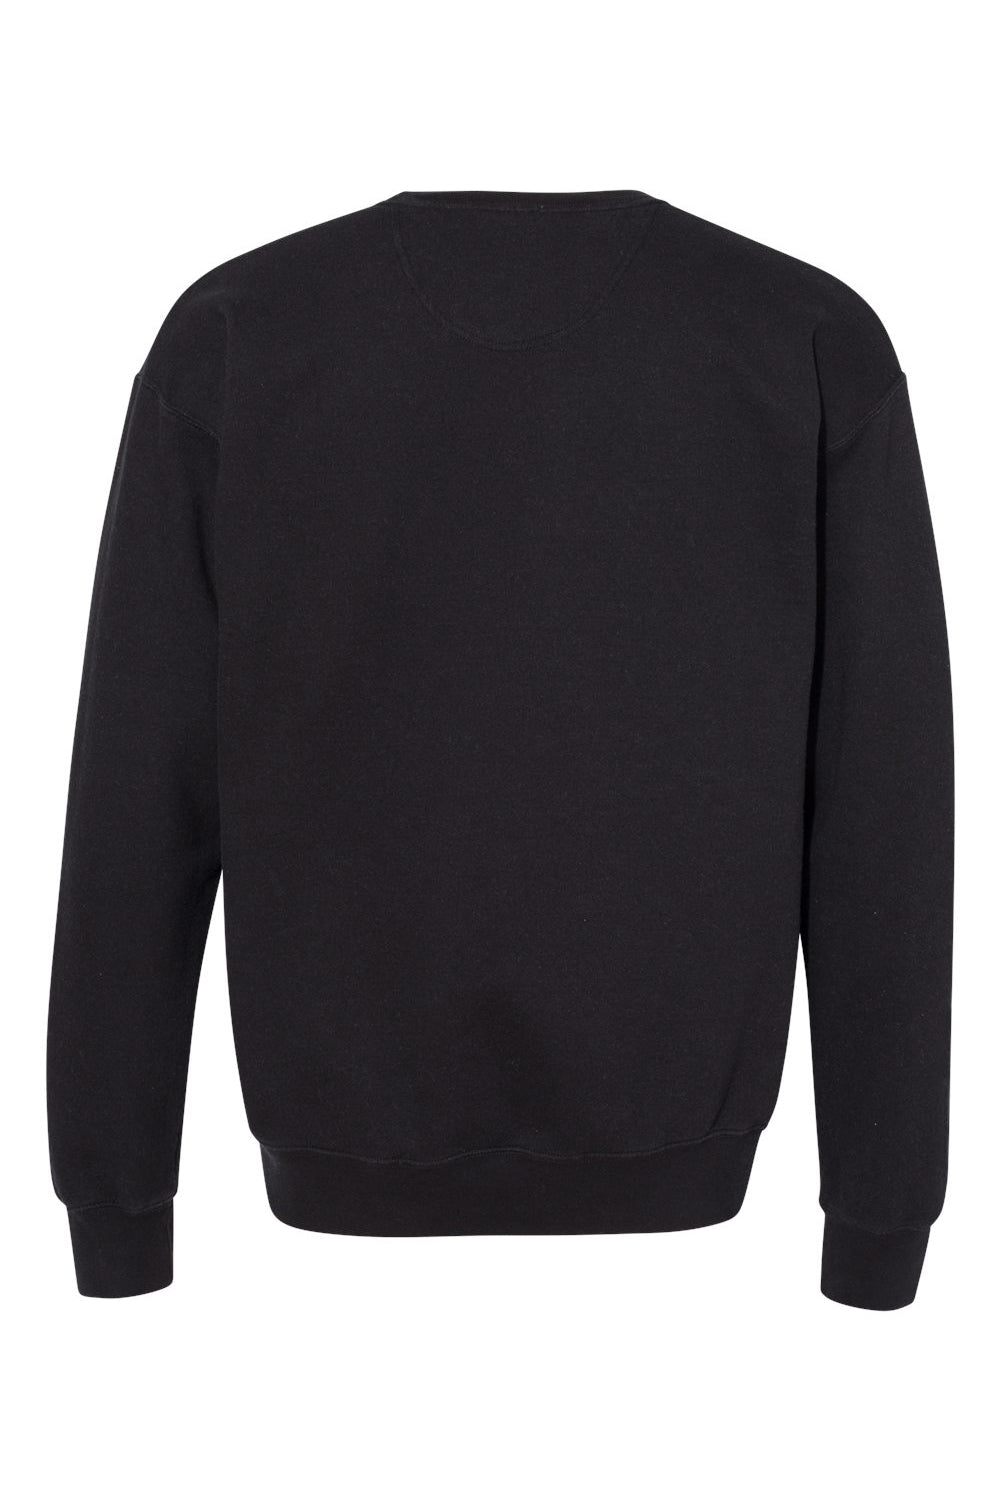 Champion CD400 Mens Garment Dyed Crewneck Sweatshirt Black Flat Back